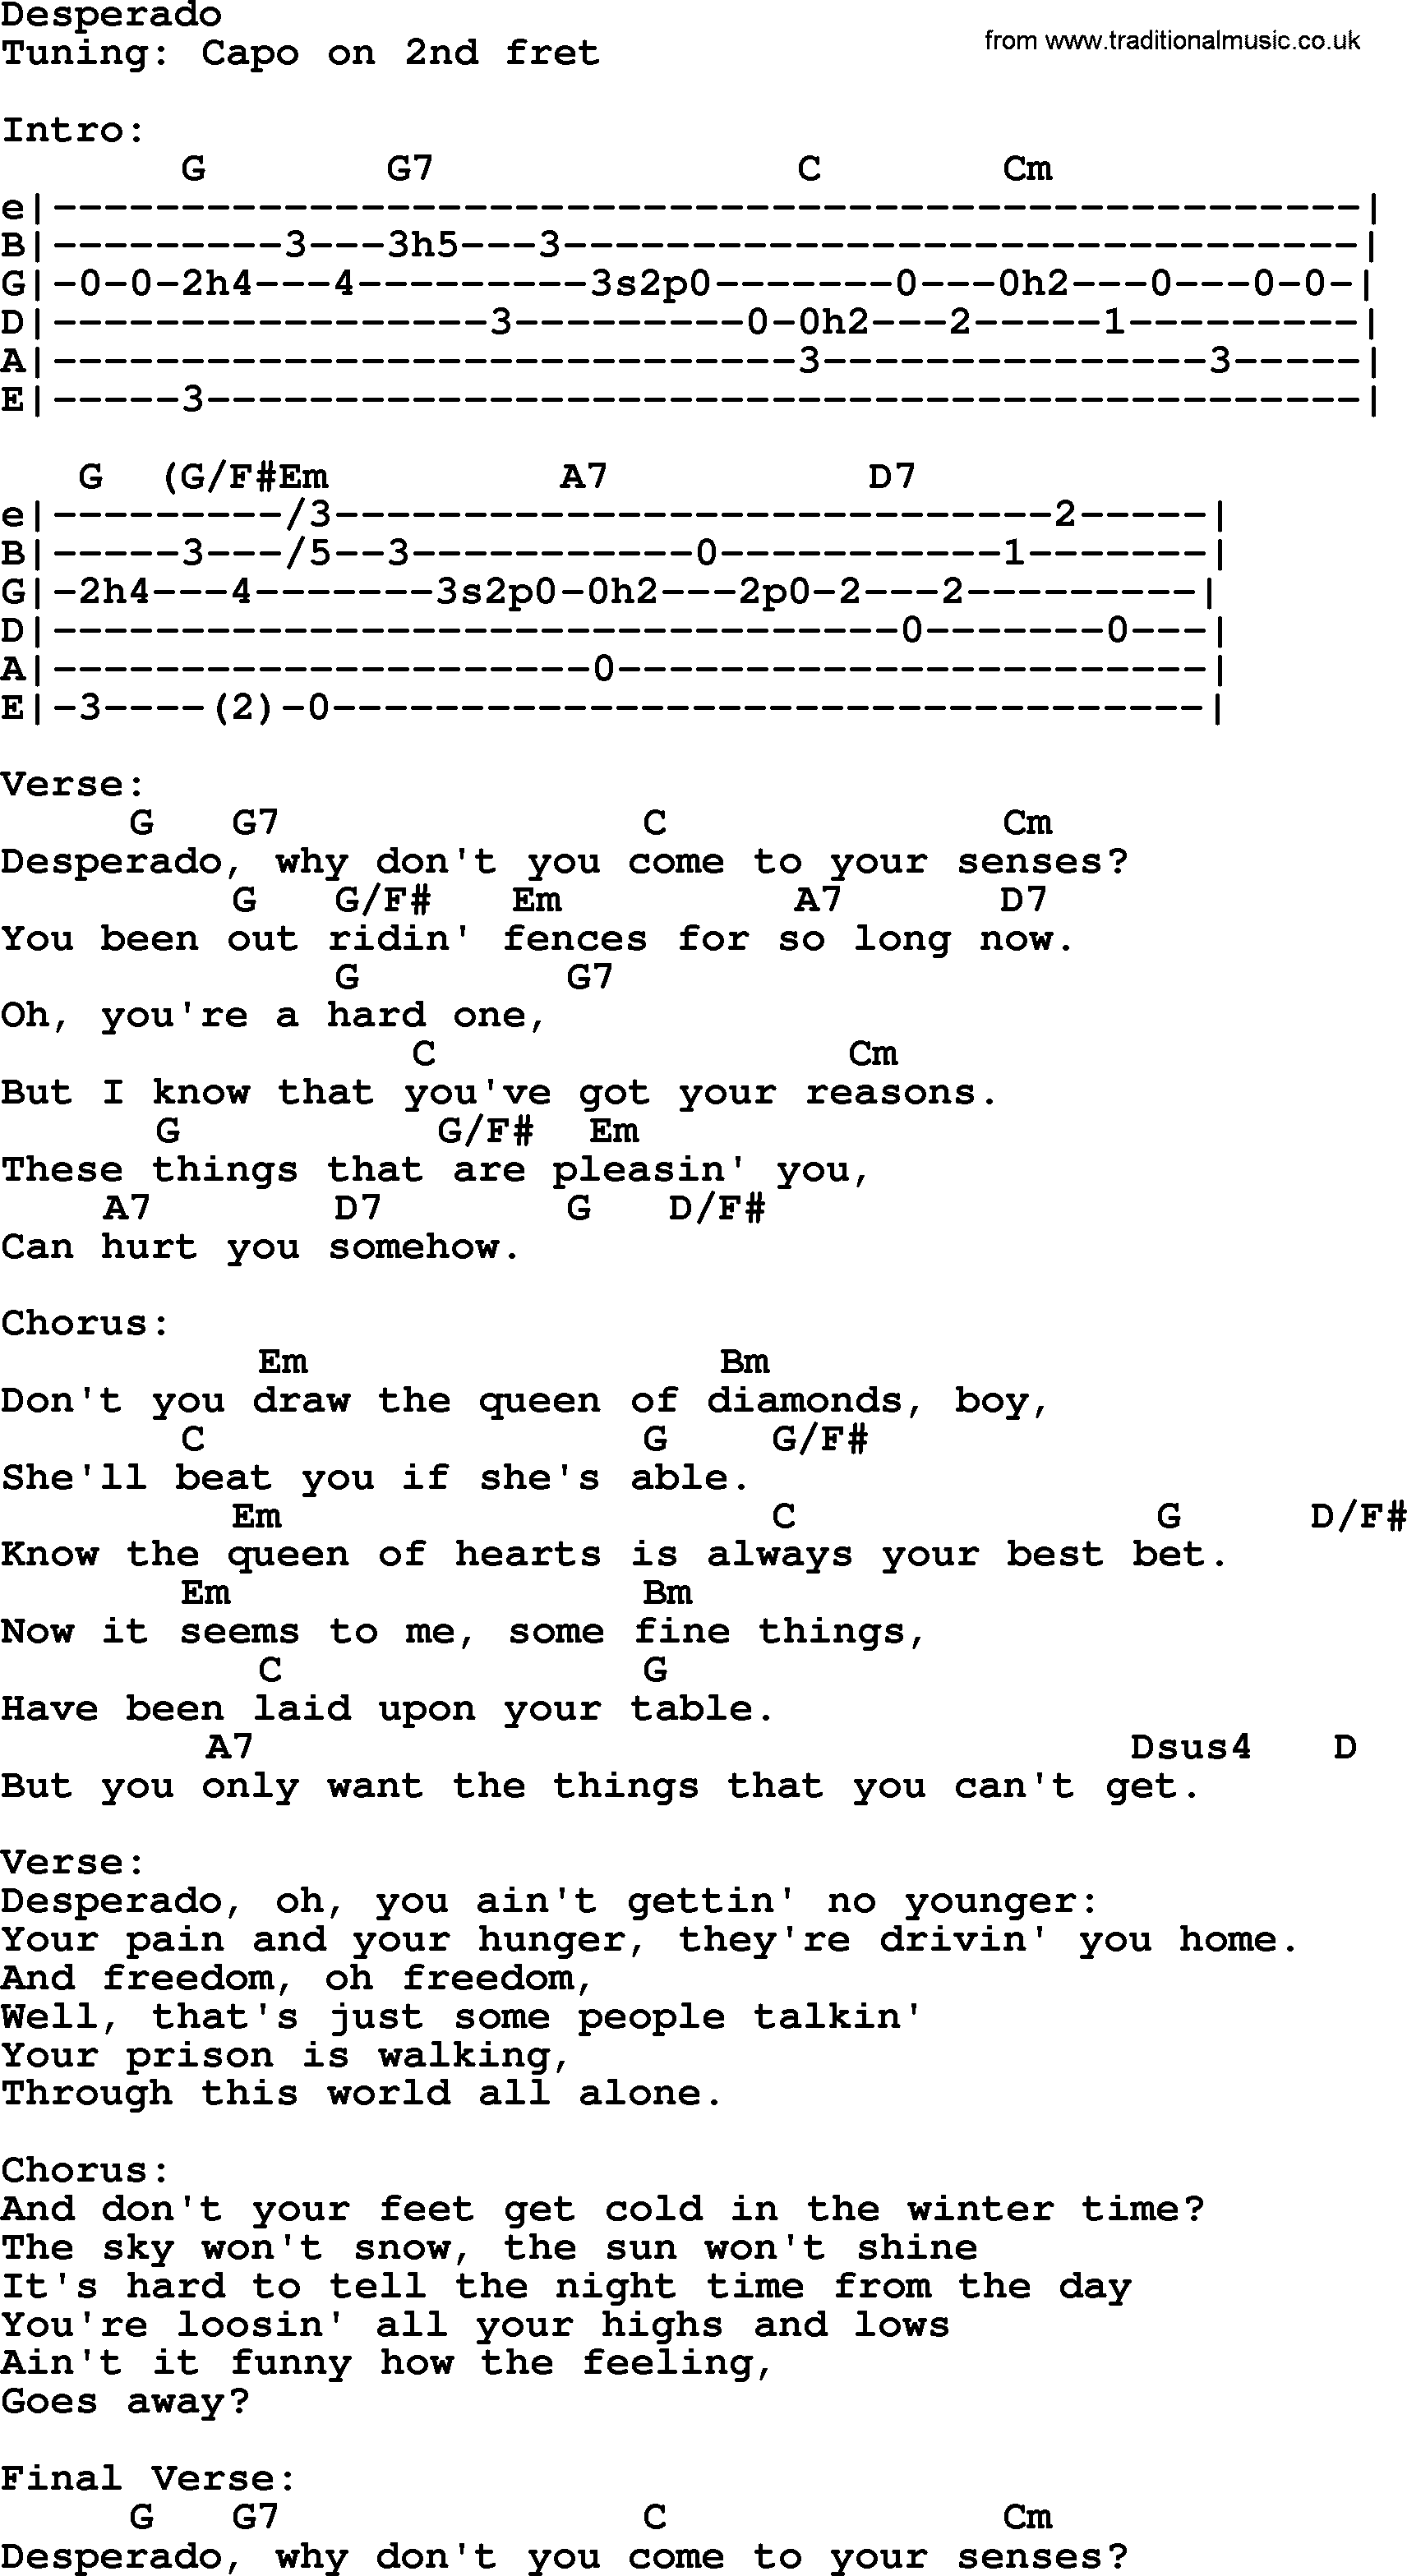 Johnny Cash song Desperado, lyrics and chords